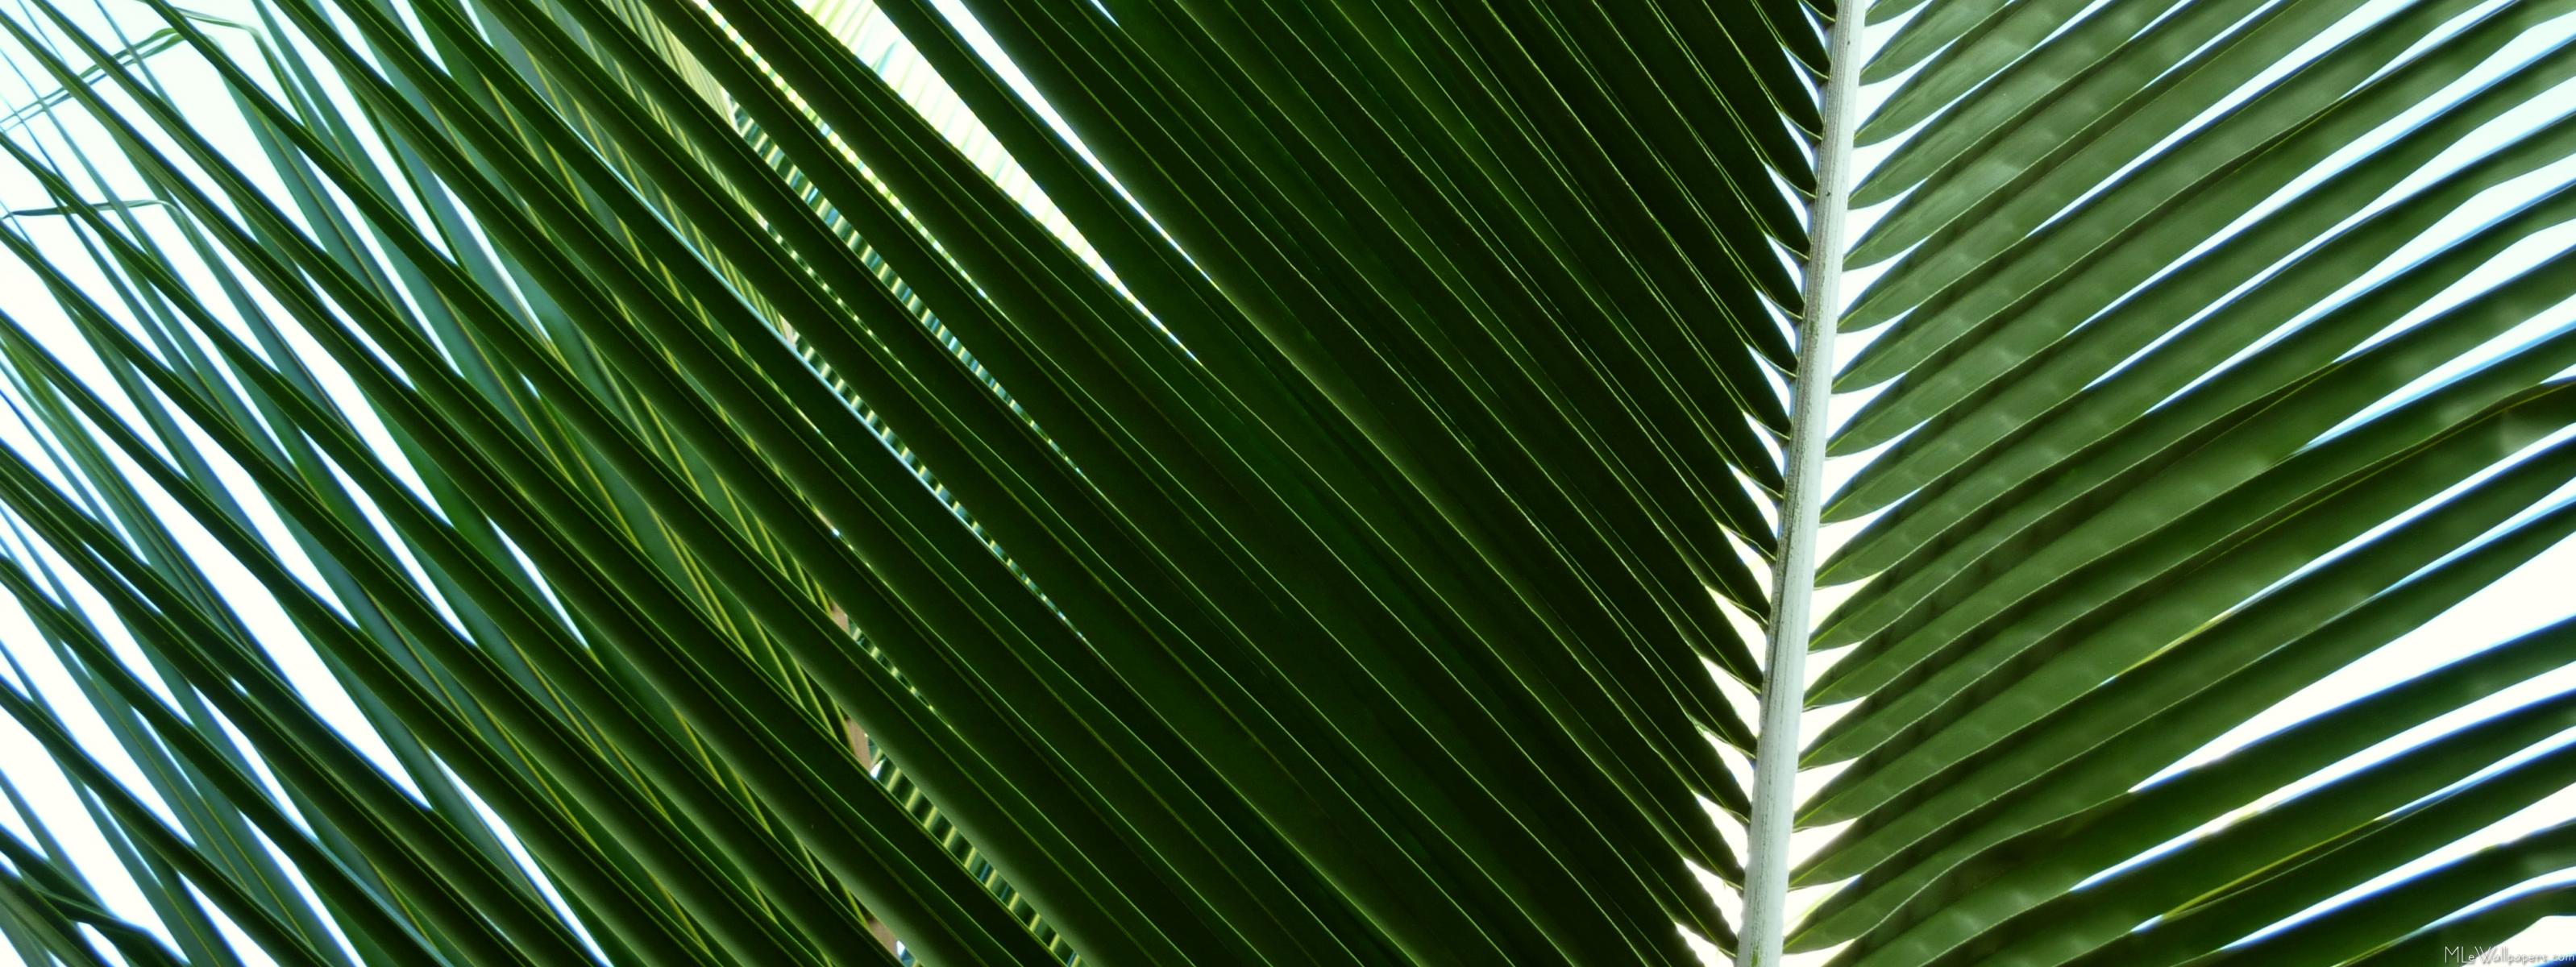 palmwedel tapete,grün,blatt,pflanze,baum,palme